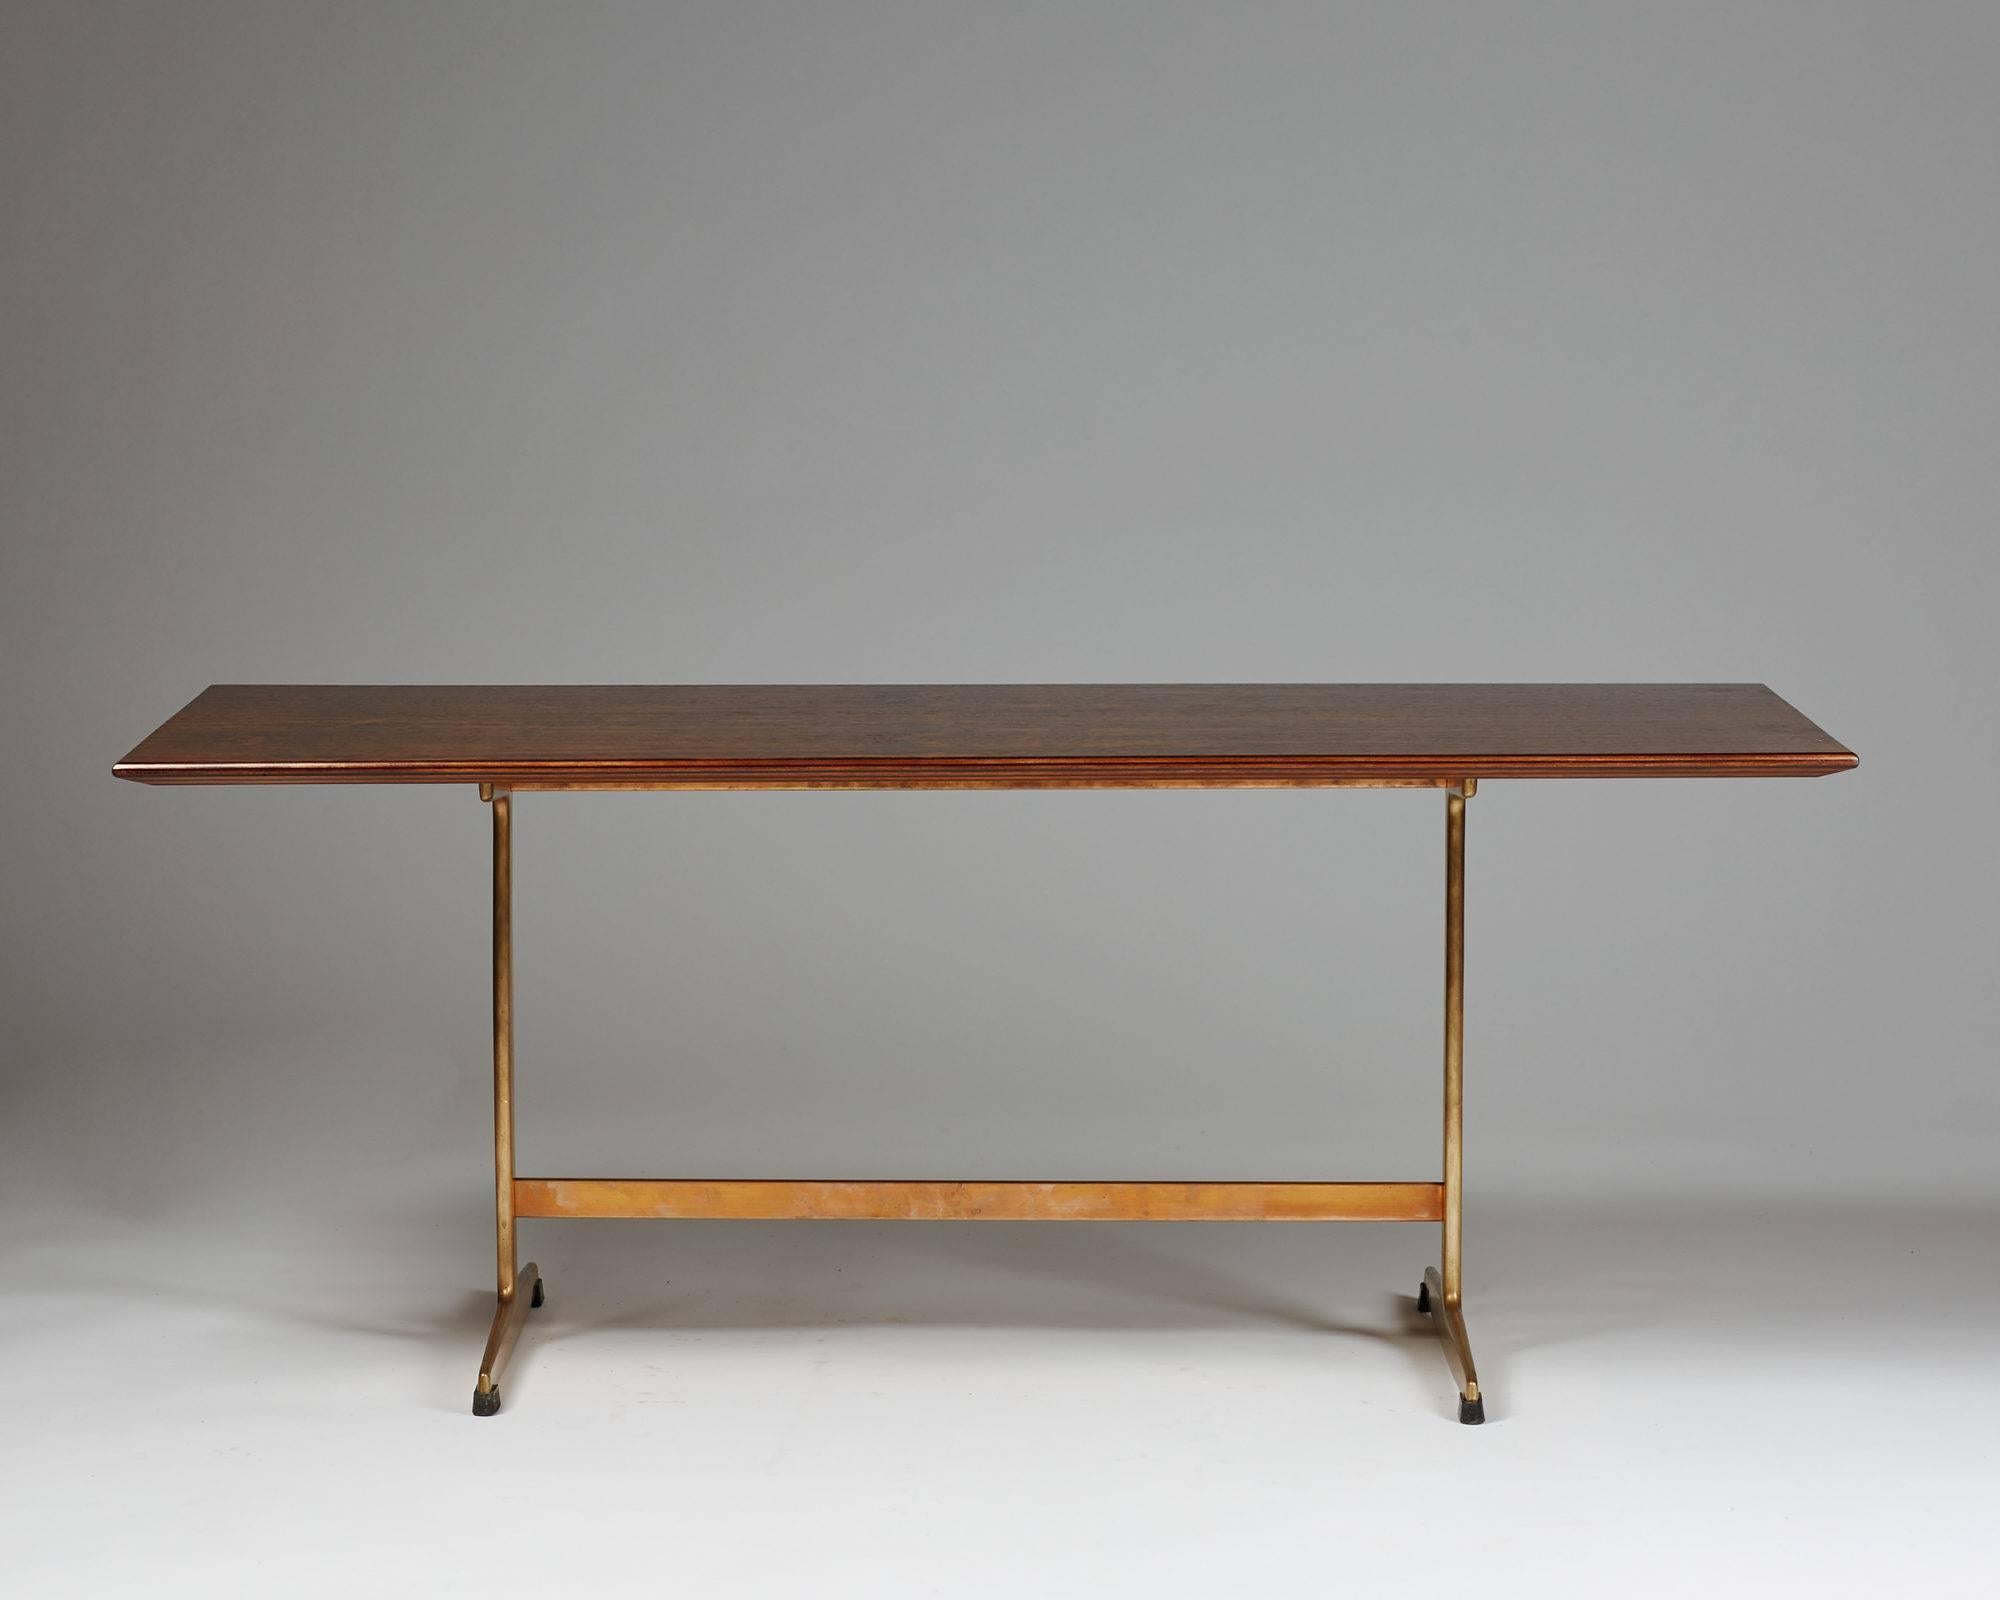 Coffee table designed by Arne Jacobsen for Fritz Hansen,
Denmark. 1950s.

Rare bronze version.

Bronze and rosewood.

H: 47 cm/ 18 1/2''
L: 120 cm/ 47 1/4''
D: 55 cm/ 21 1/2''